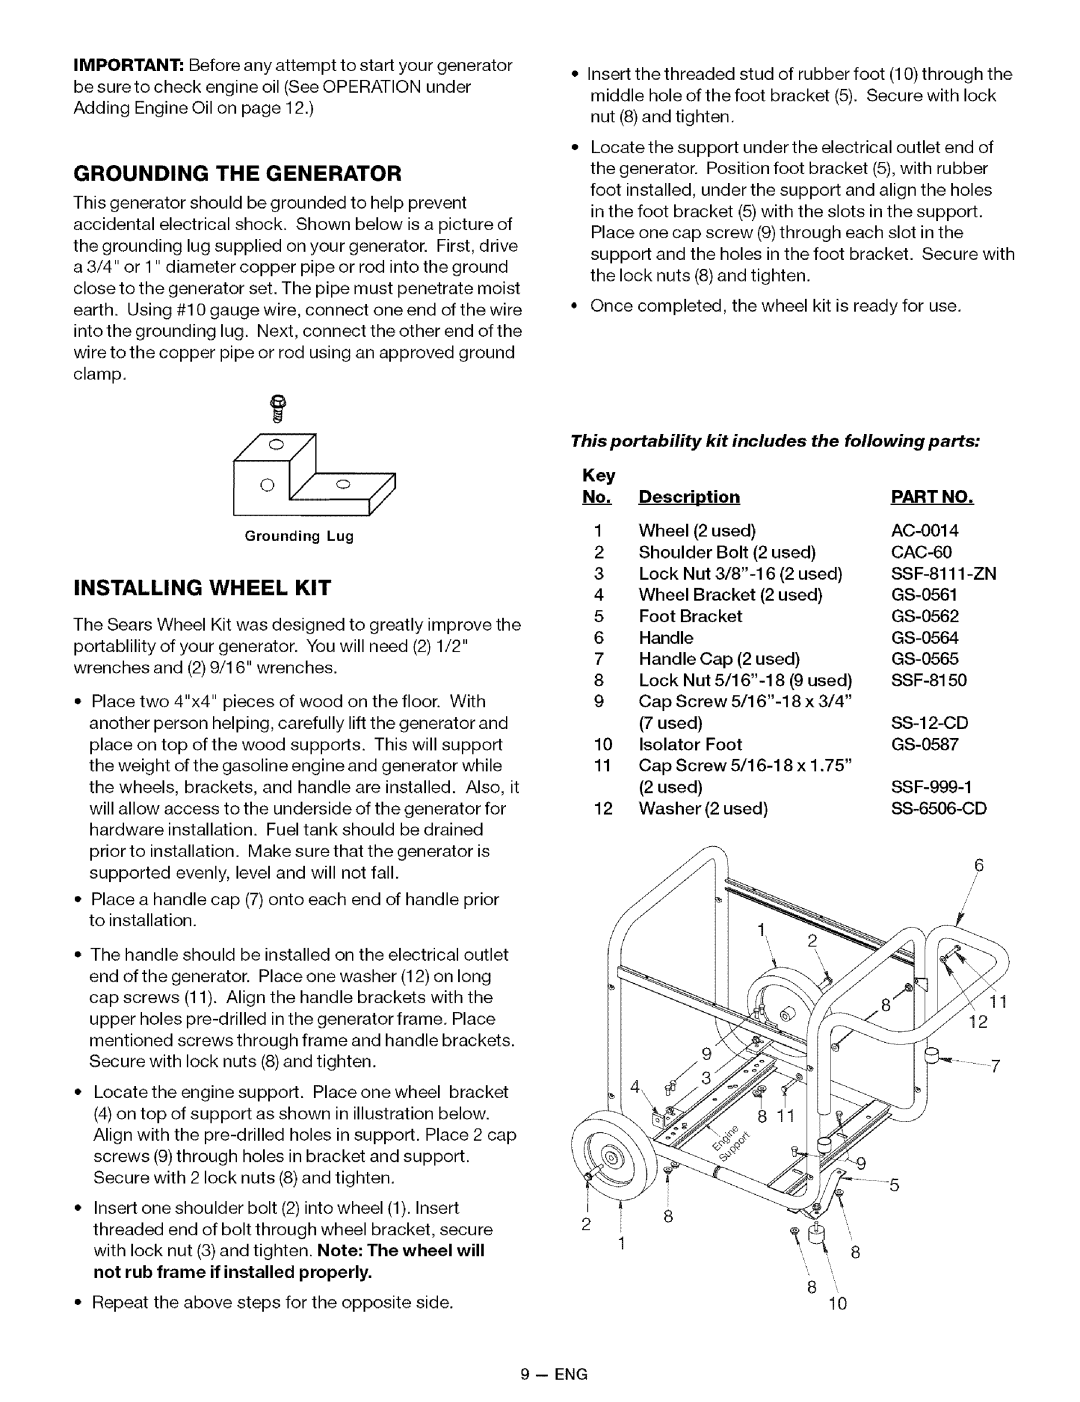 Sears 919.32721 owner manual Grounding The Generator, Installing Wheel Kit, Key No. Description, Part No 